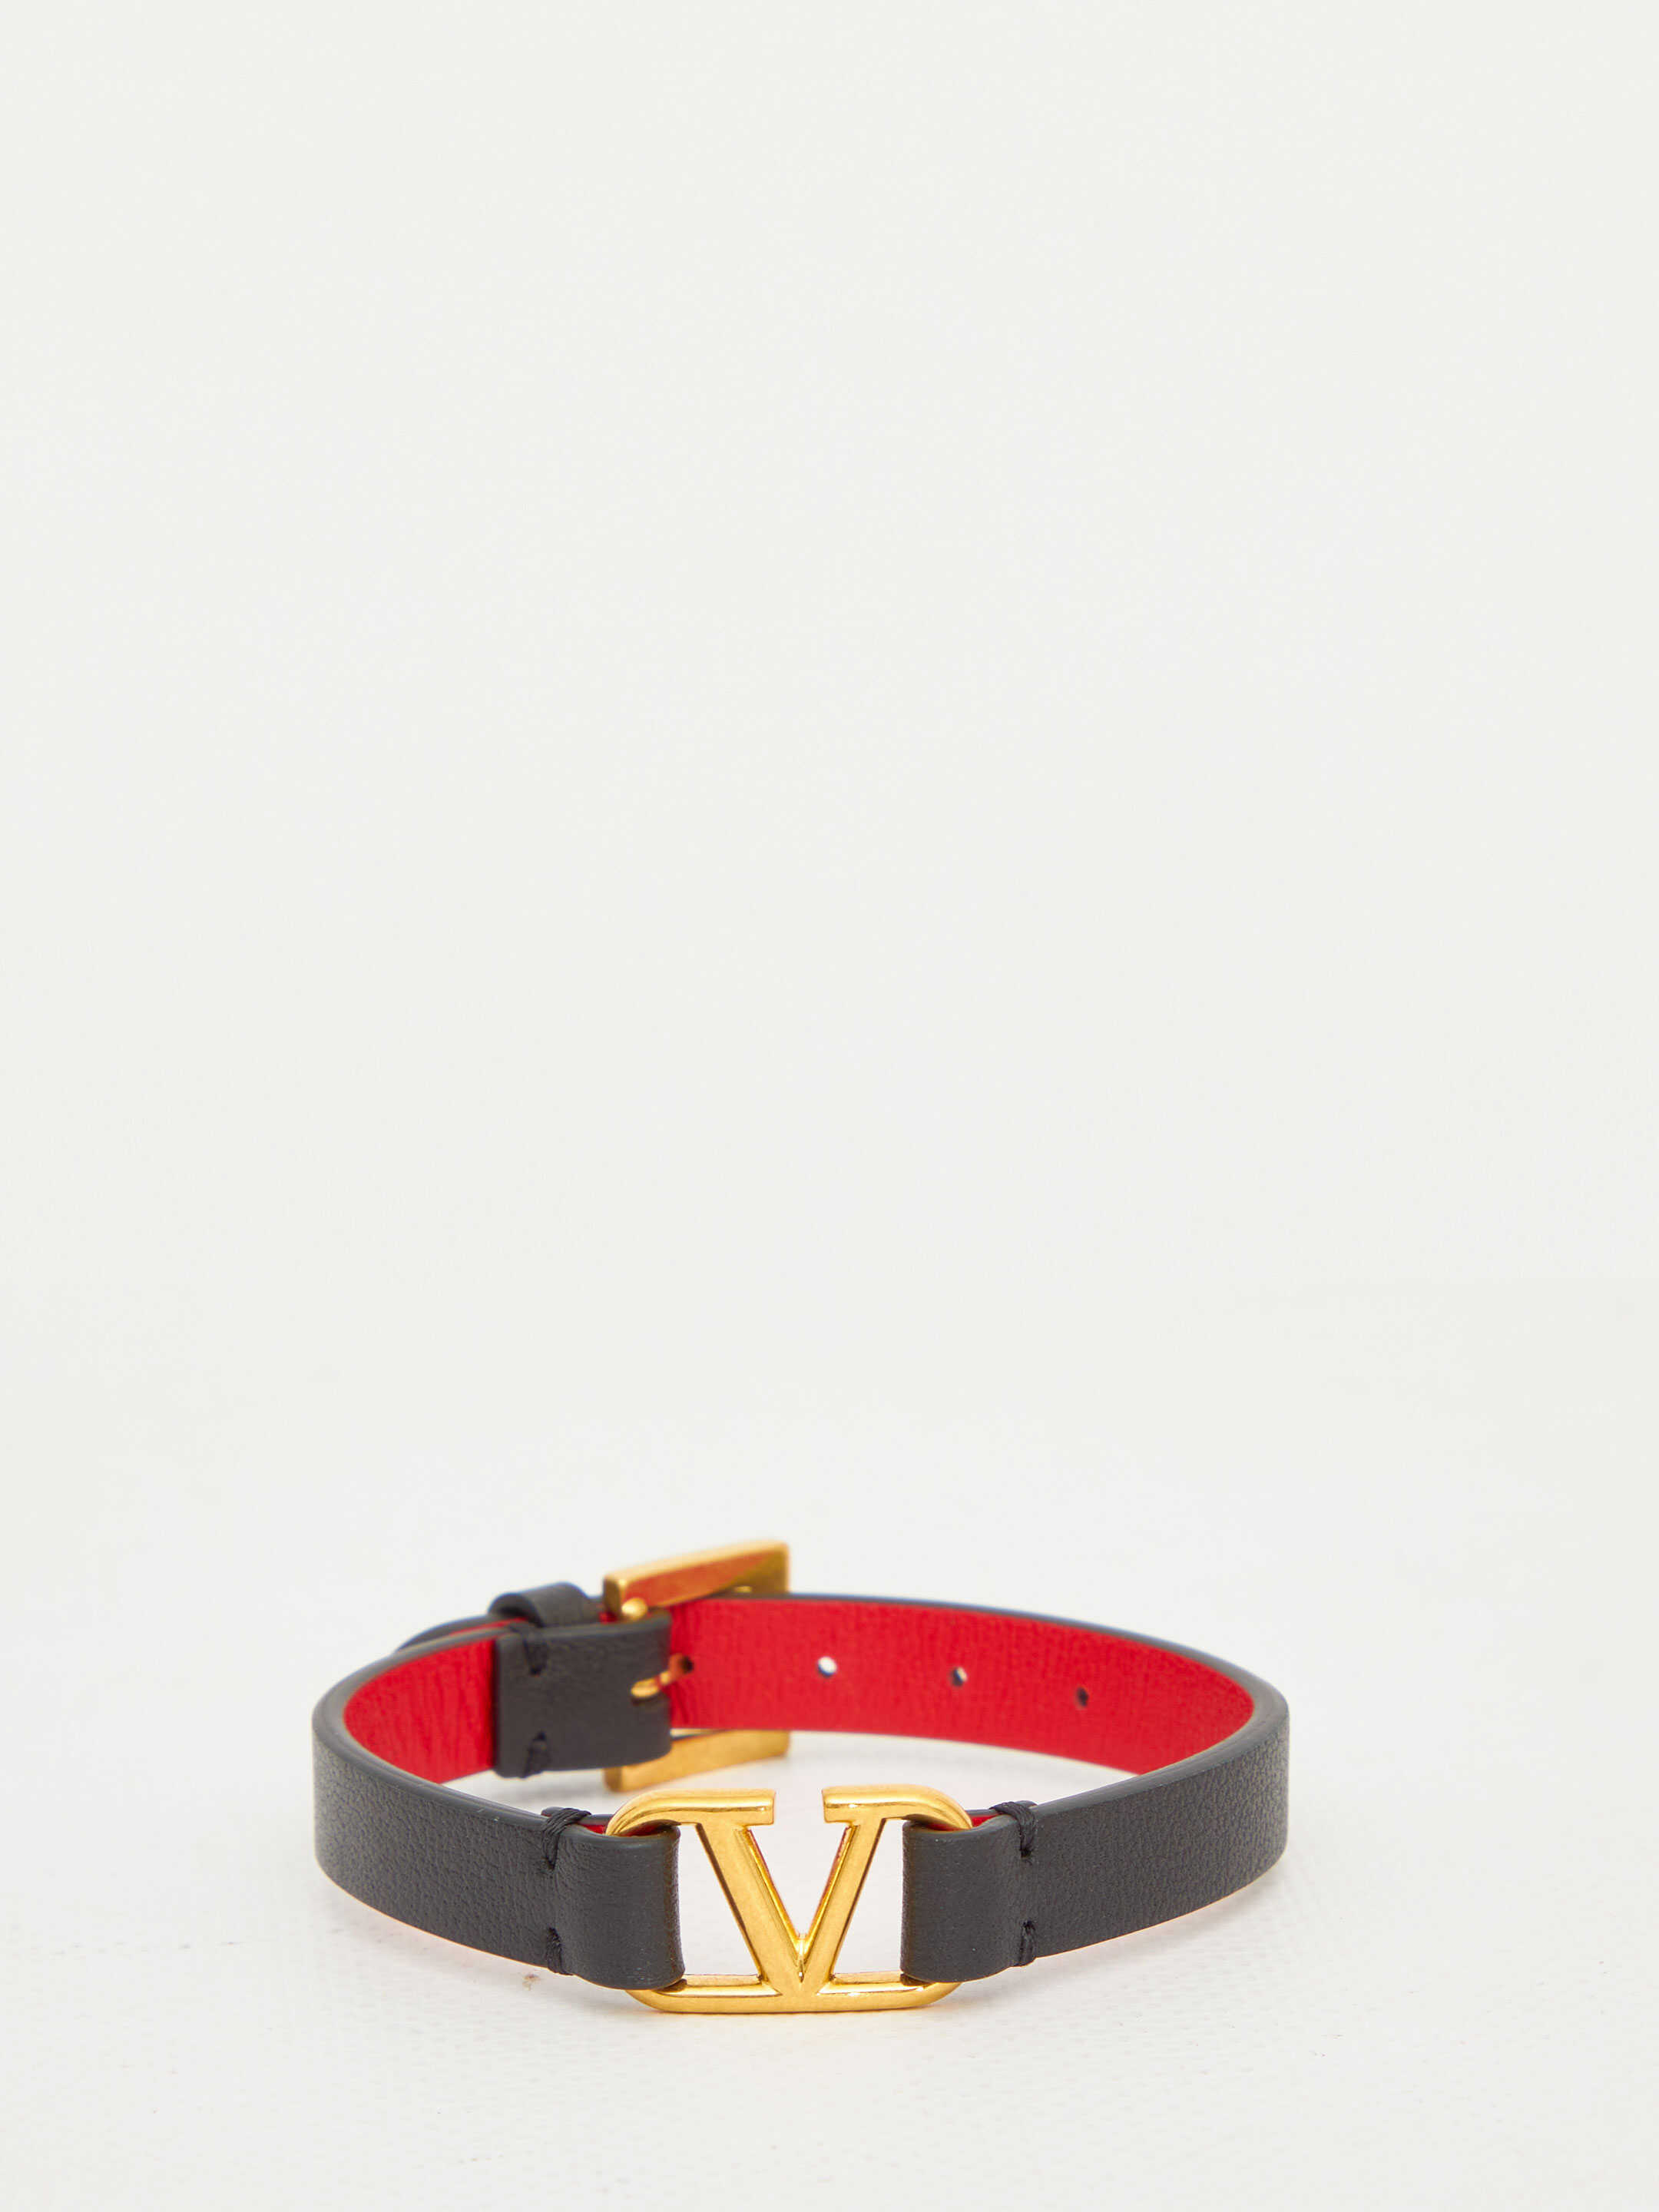 Valentino Garavani Vlogo Signature Bracelet Black/red image0